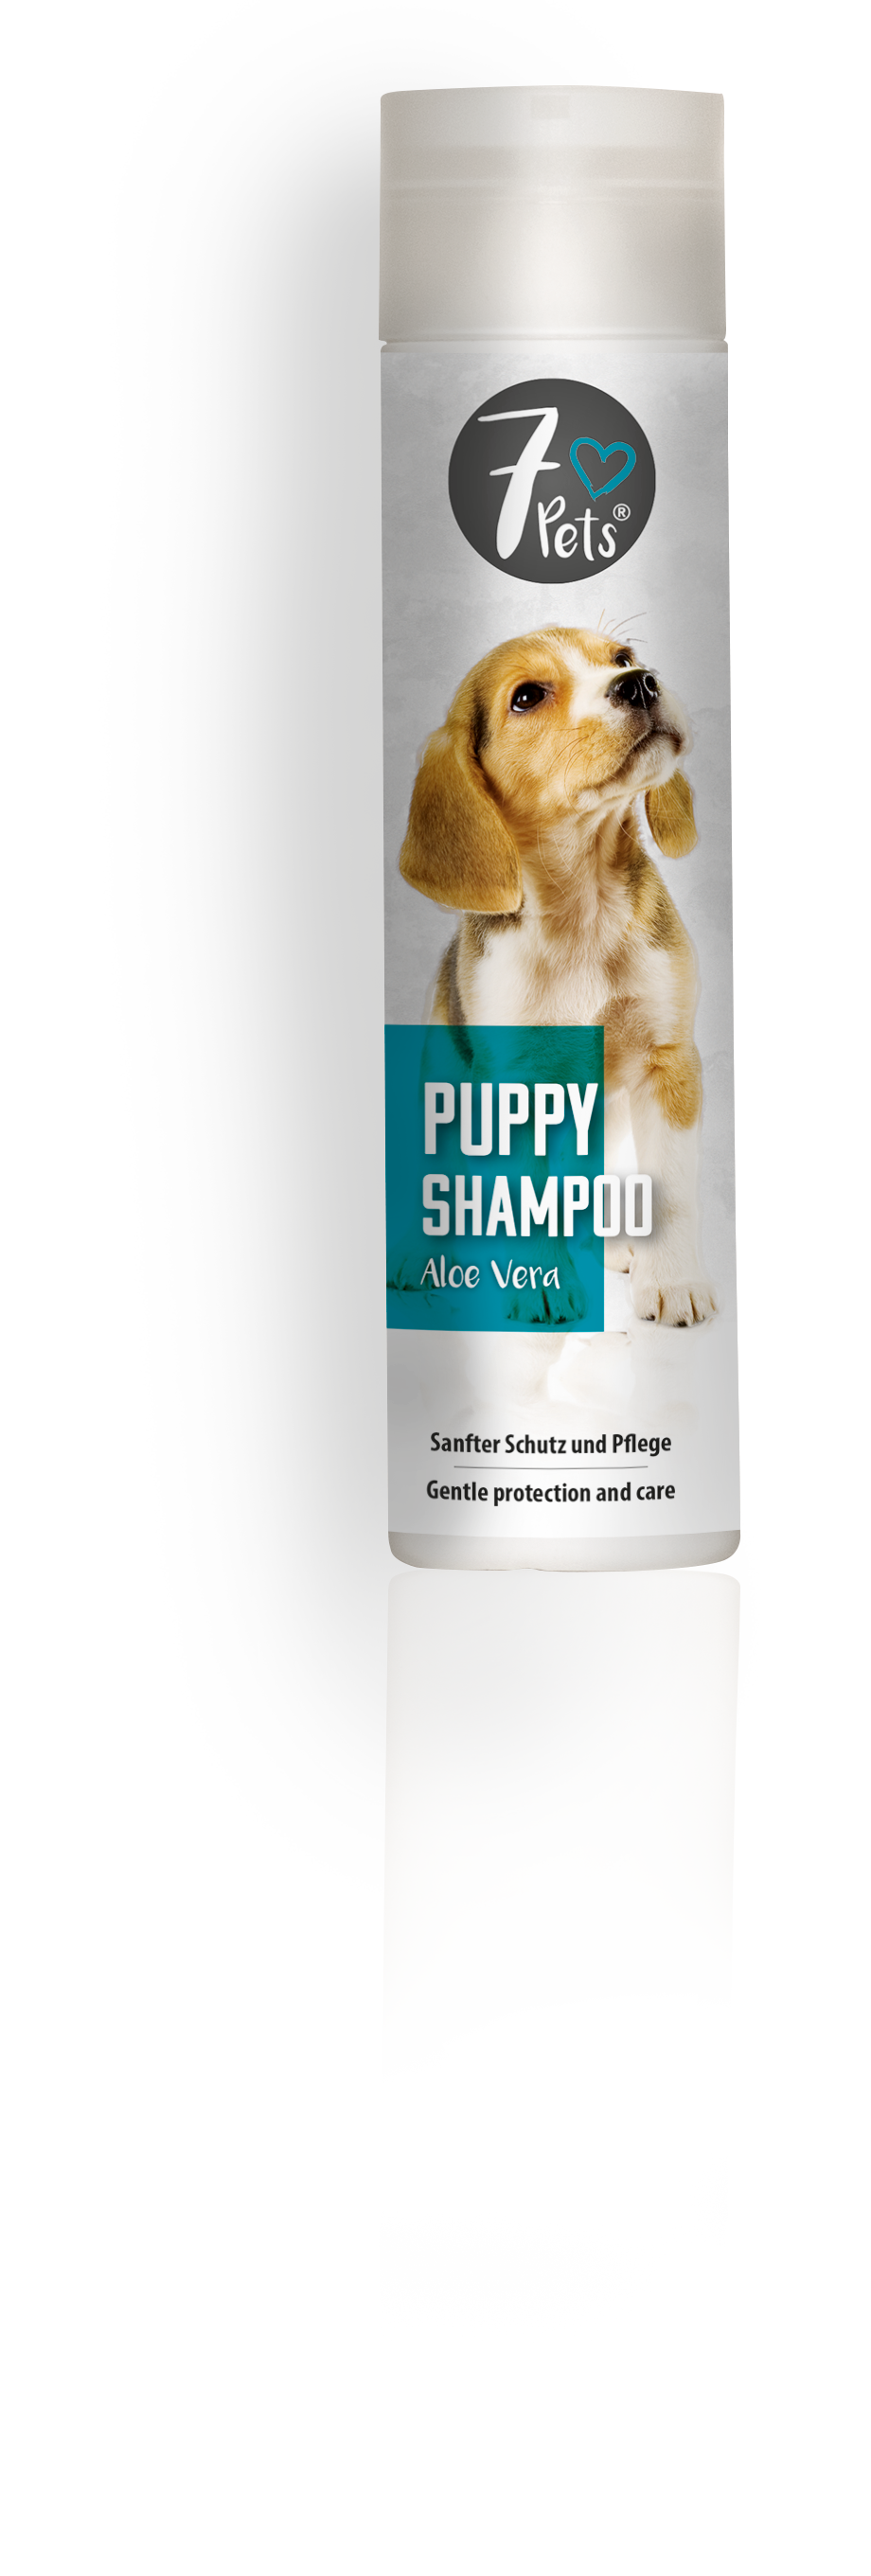 7Pets Puppy Shampoo Aloe Vera Welpenshampoo 250 ml